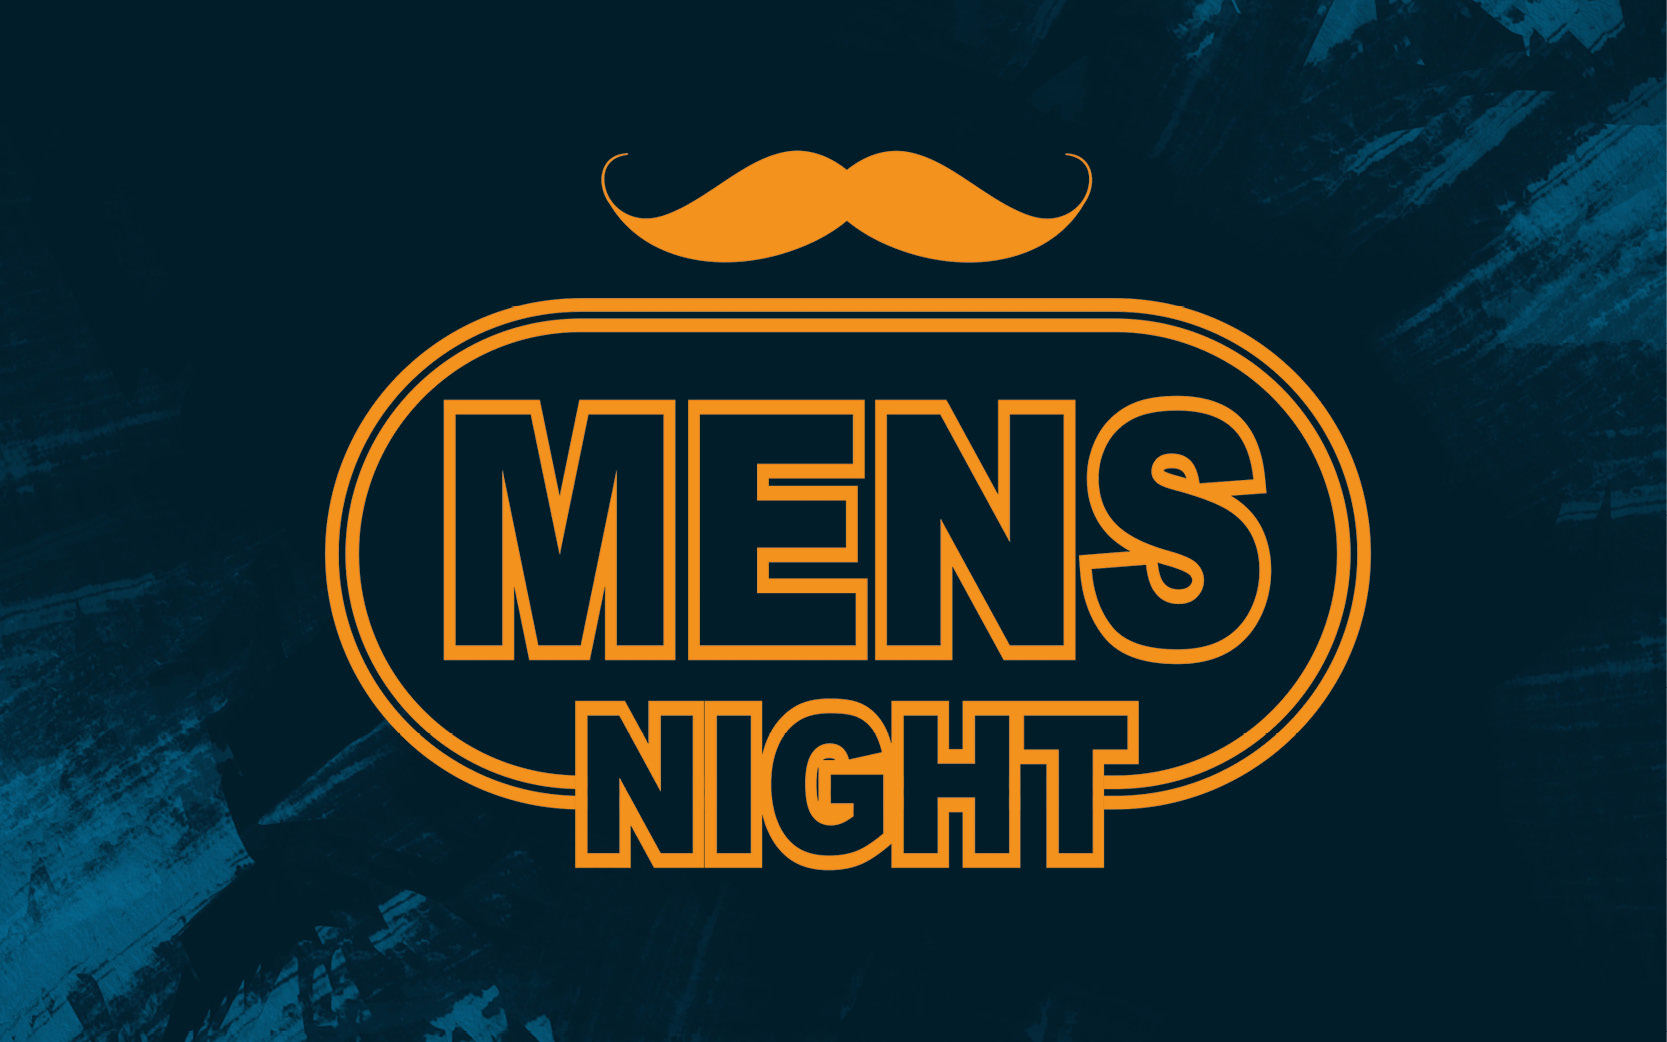 Men's night